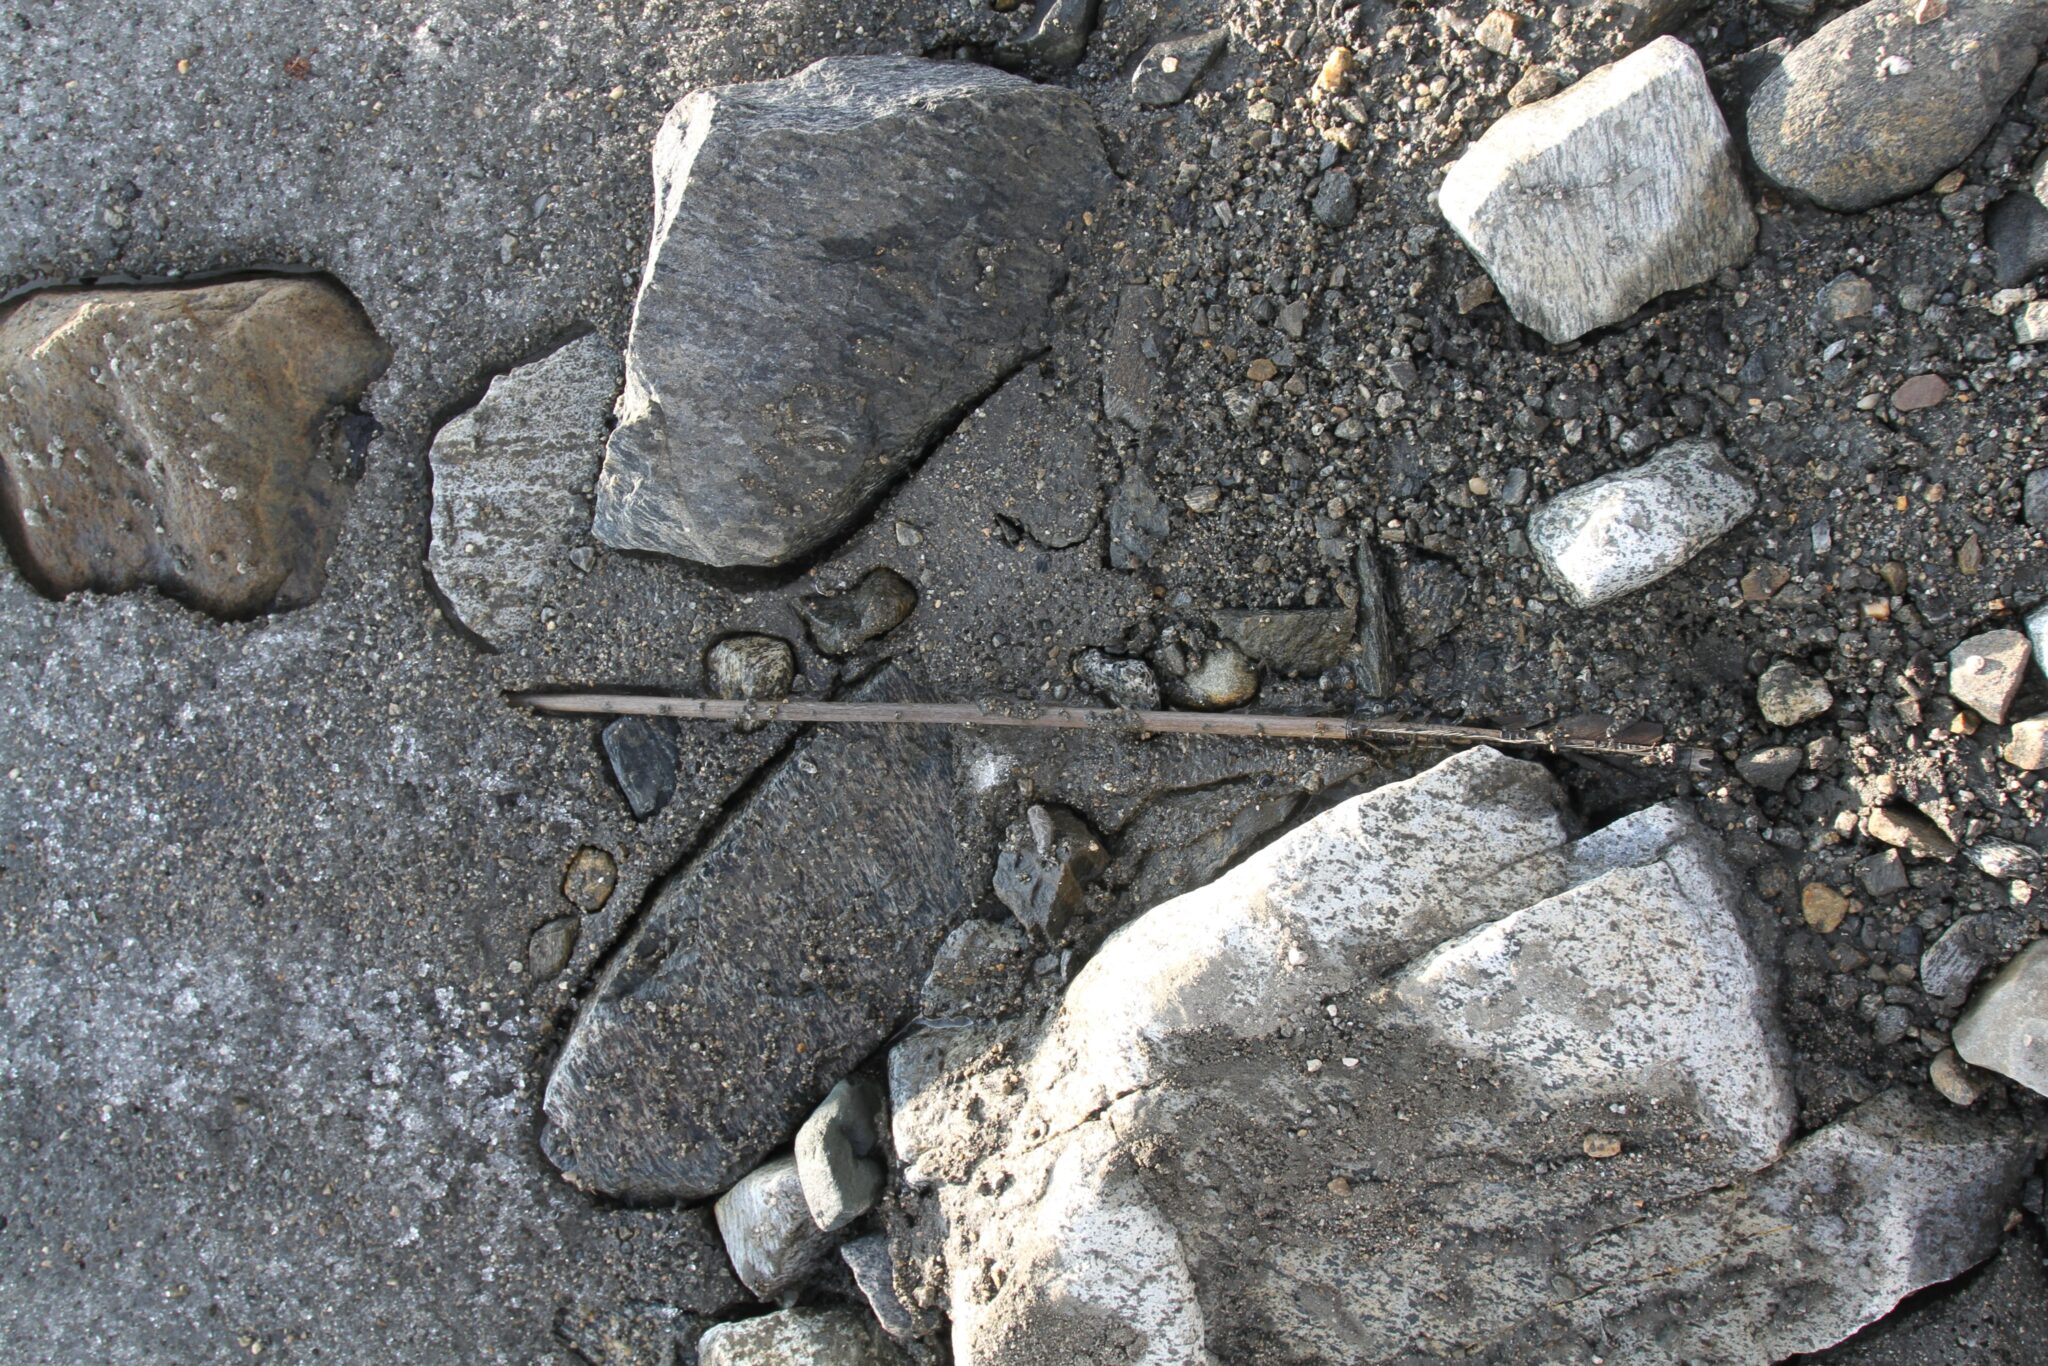 Arrow with pristine fletching found in Norway glacier